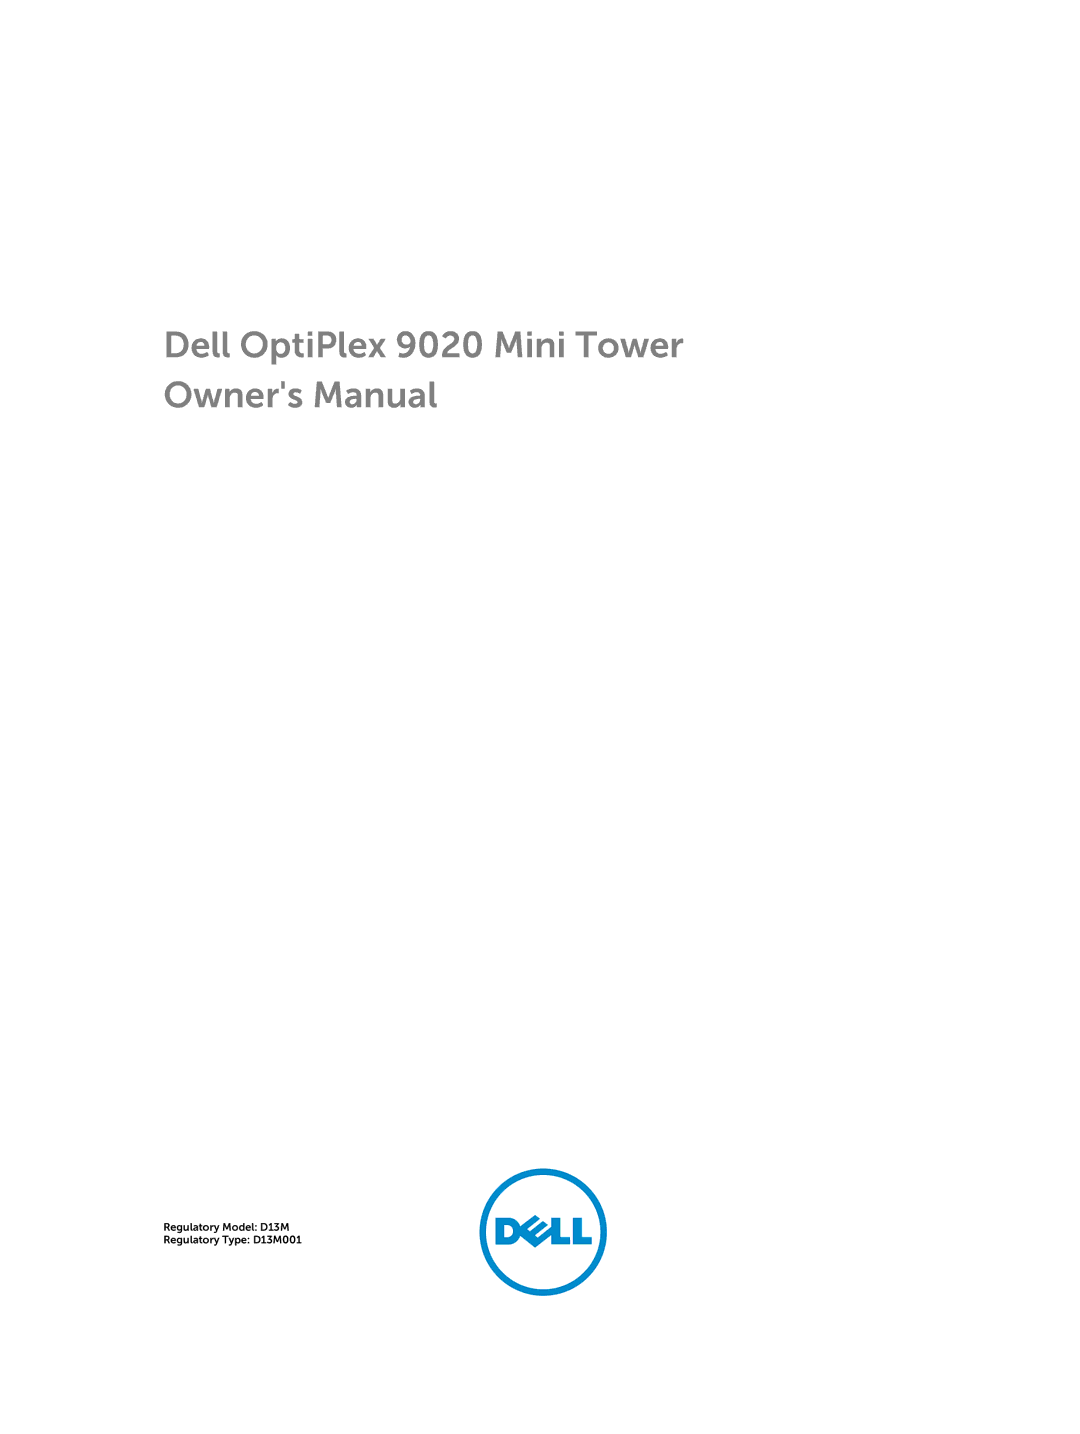 Dell owner manual Dell OptiPlex 9020 Mini Tower 